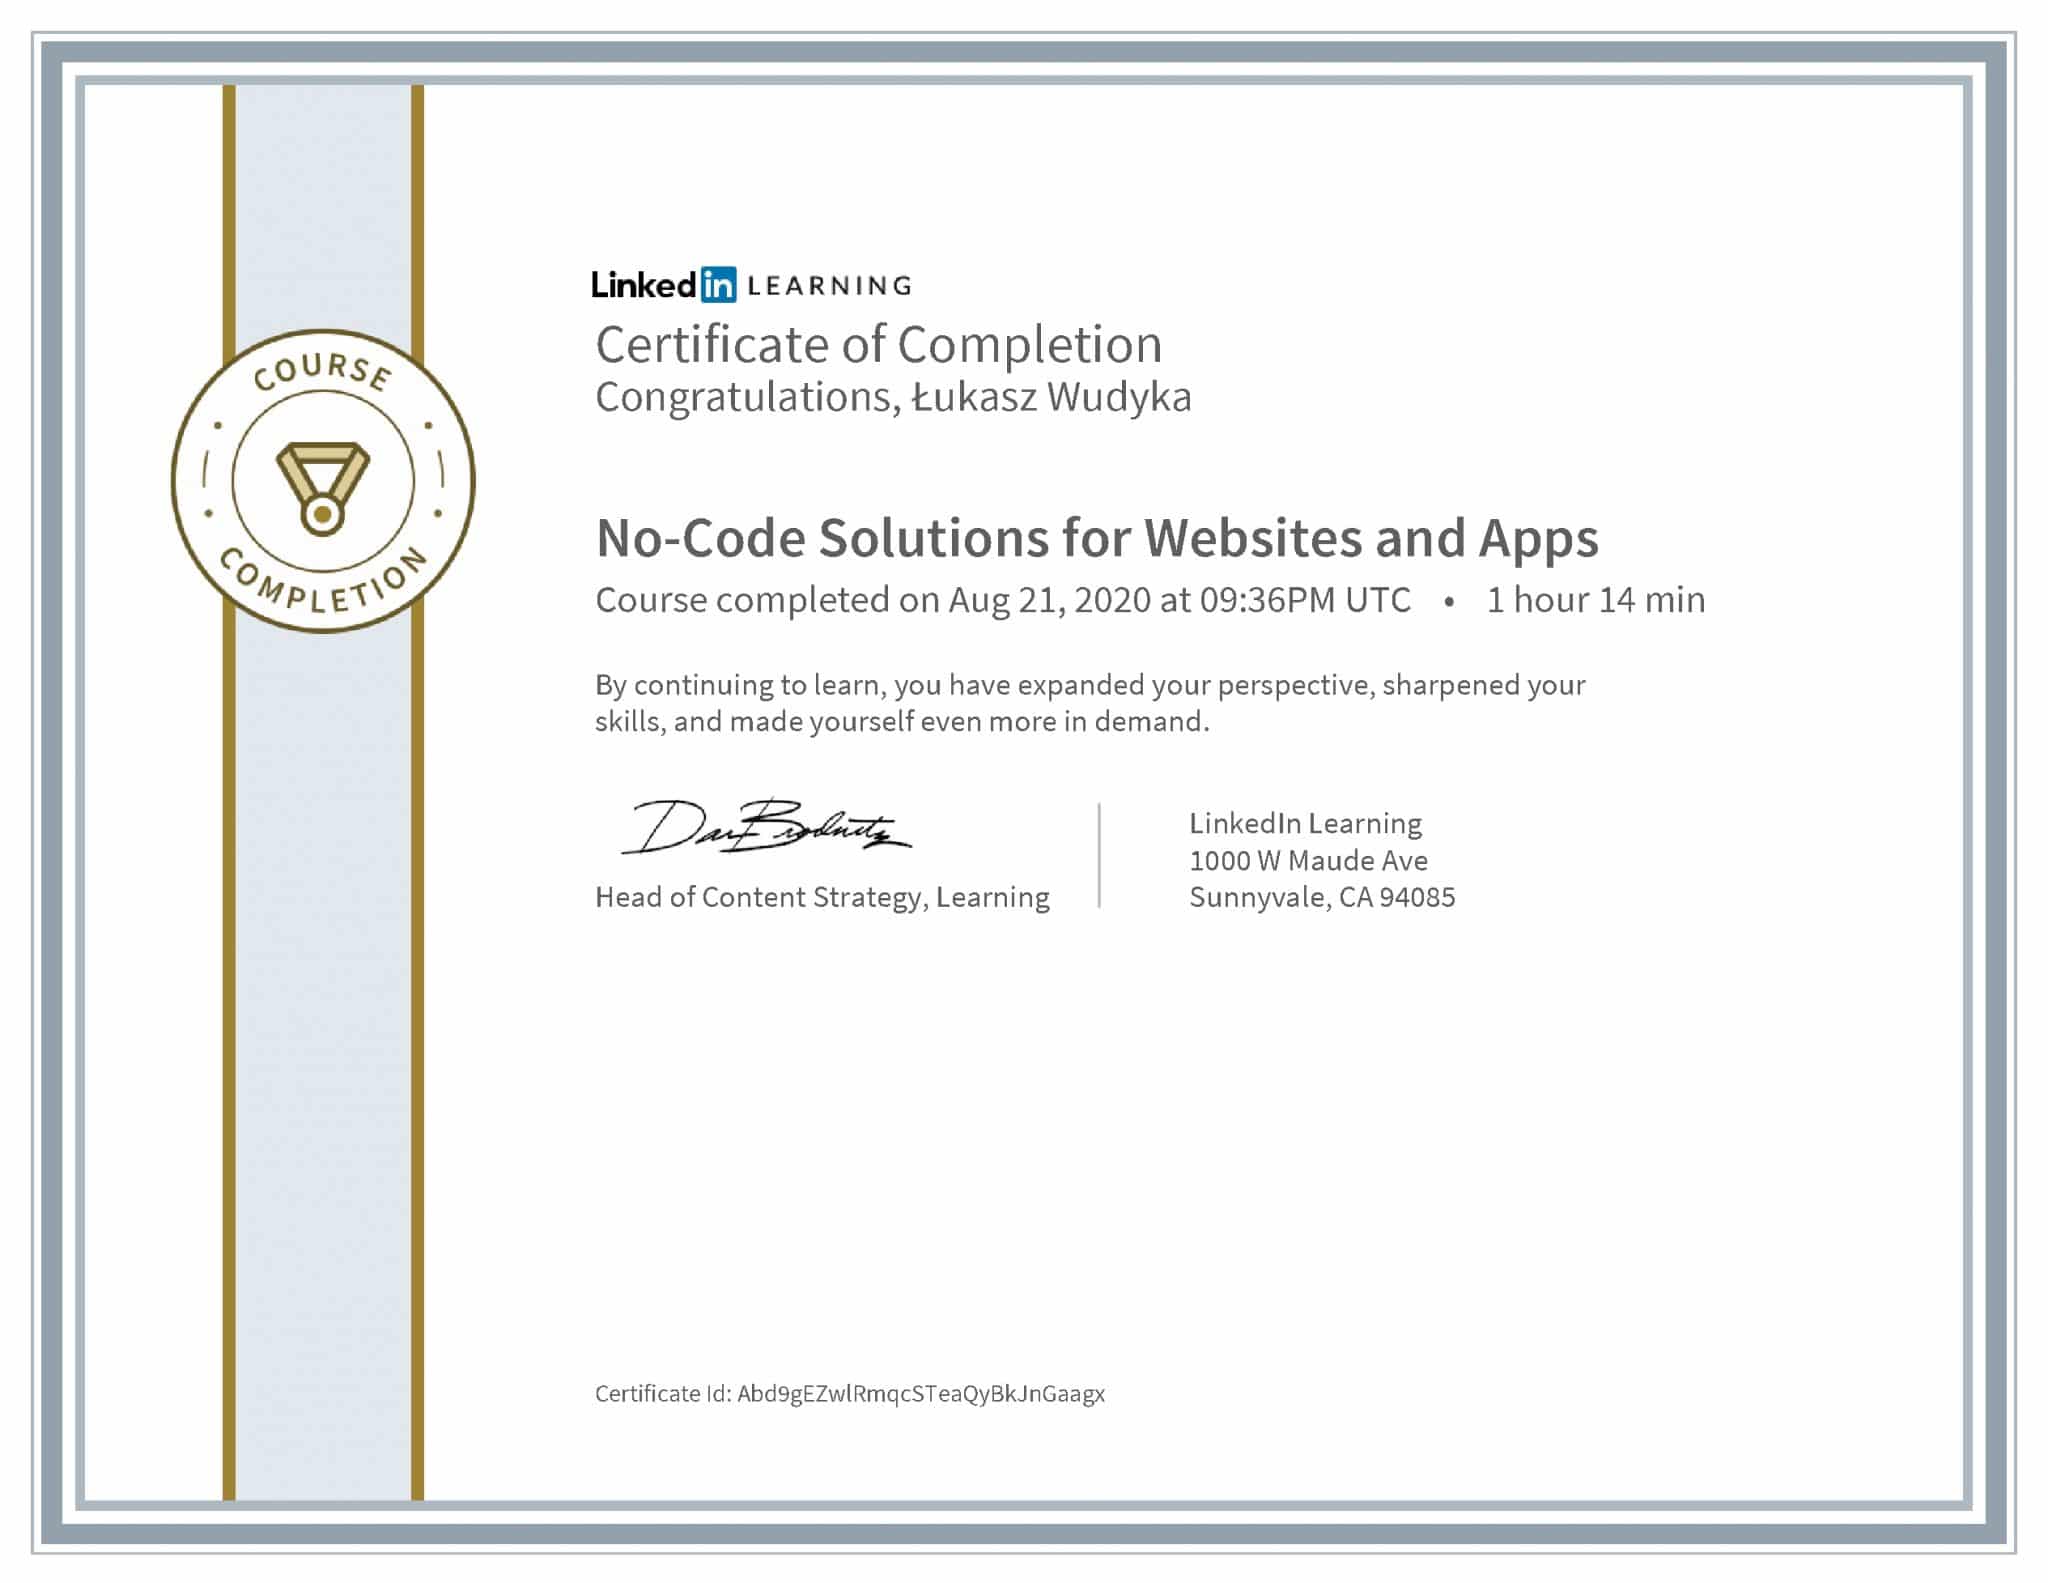 Łukasz Wudyka certyfikat LinkedIn No-Code Solutions for Websites and Apps